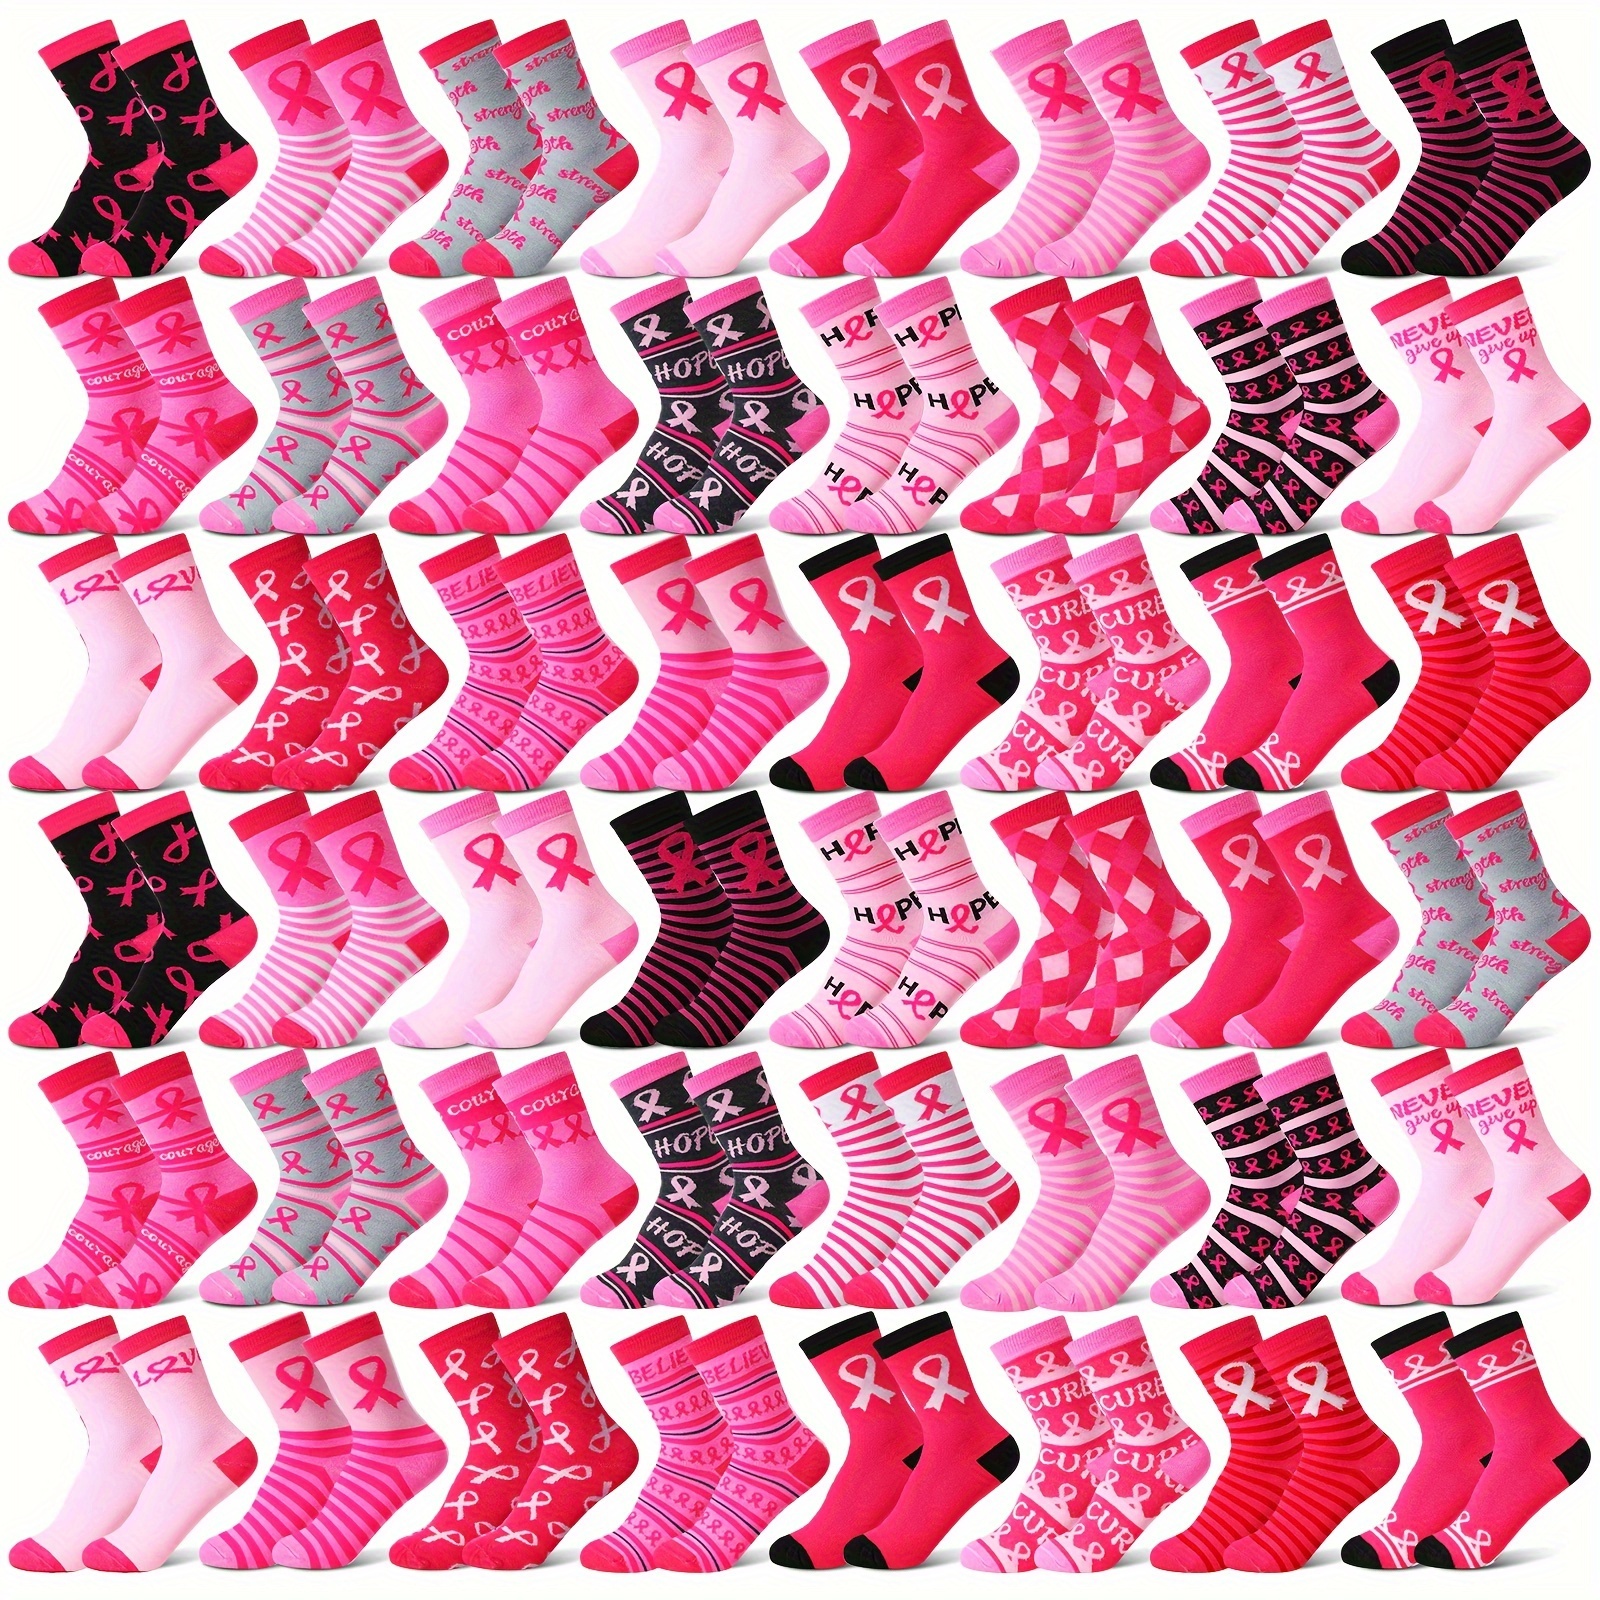 

48 Pairs Breast Cancer Awareness Socks Crew Socks Soft Breast Cancer Socks Bulk Gift For Women Girls Breast Cancer Accessories Party Volunteer Sport Survivor Decoration